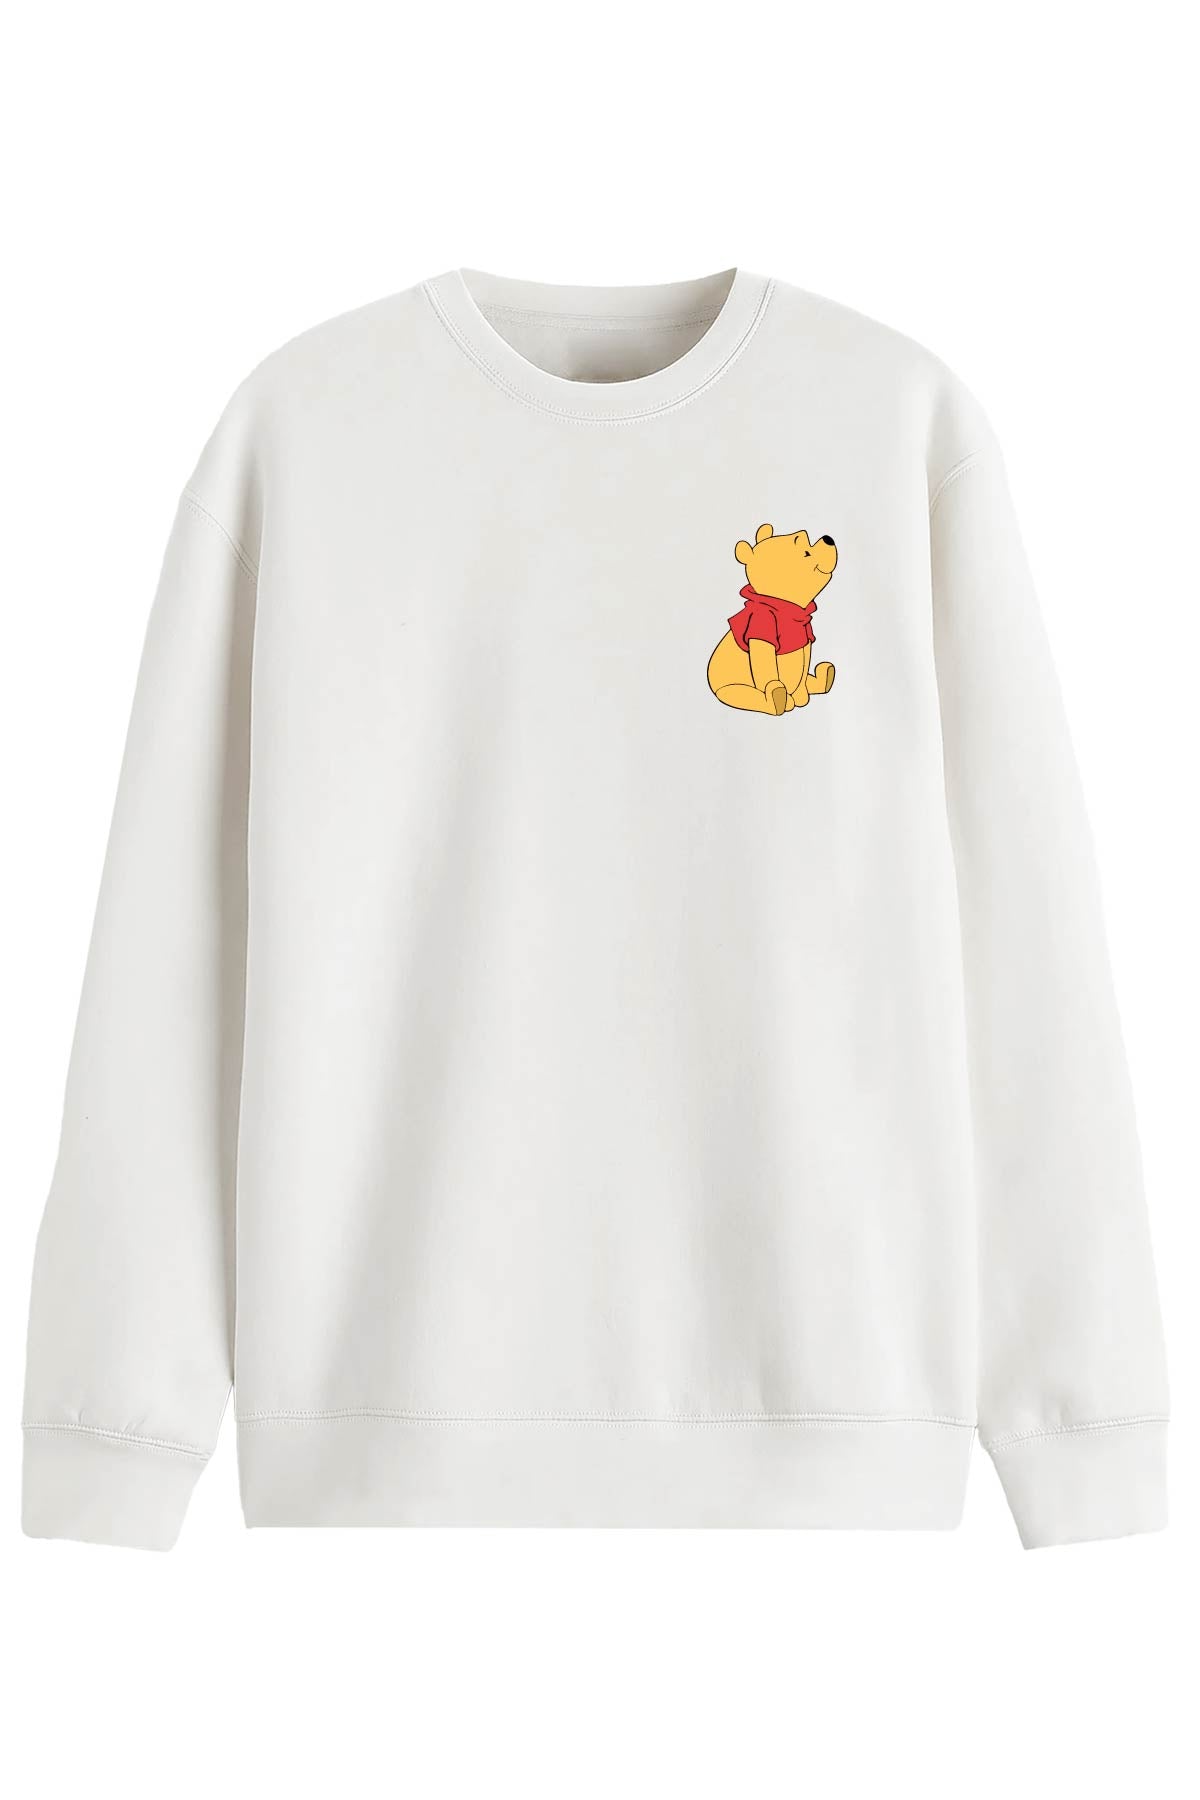 Winnie The Pooh -  Sweatshirt